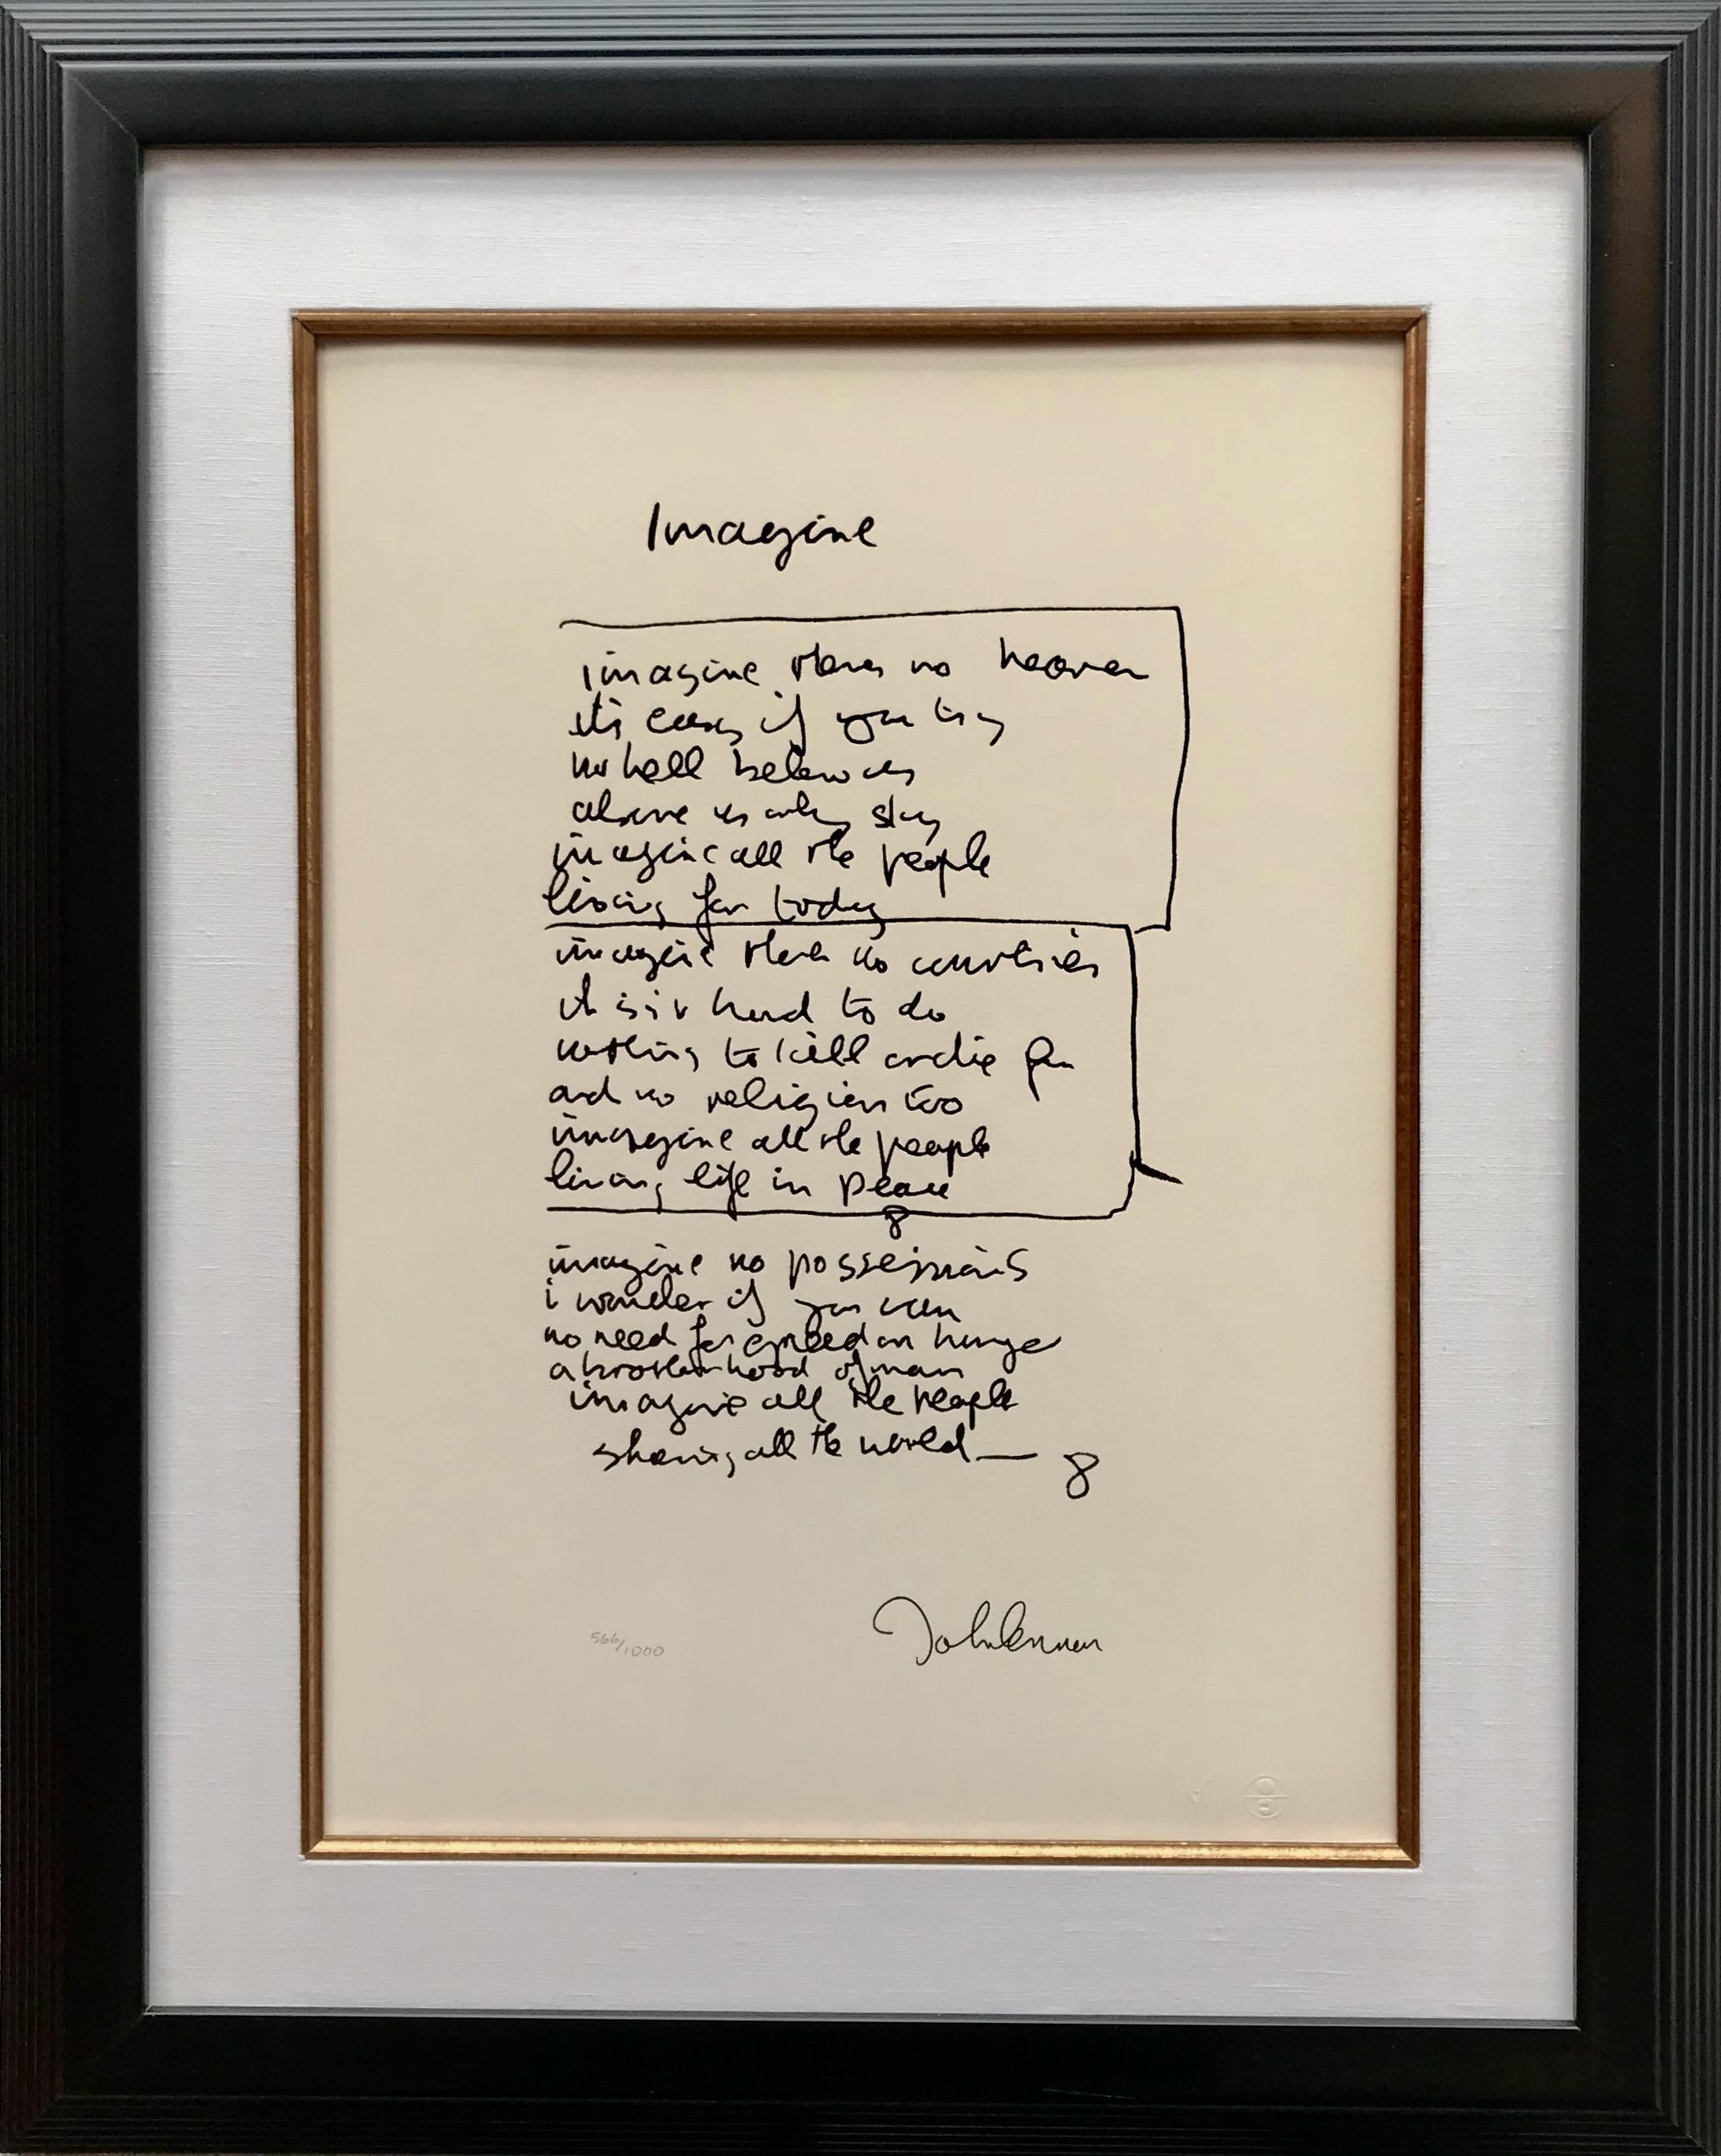 John Lennon Print - "Imagine" Limited Edition Hand Written Lyrics